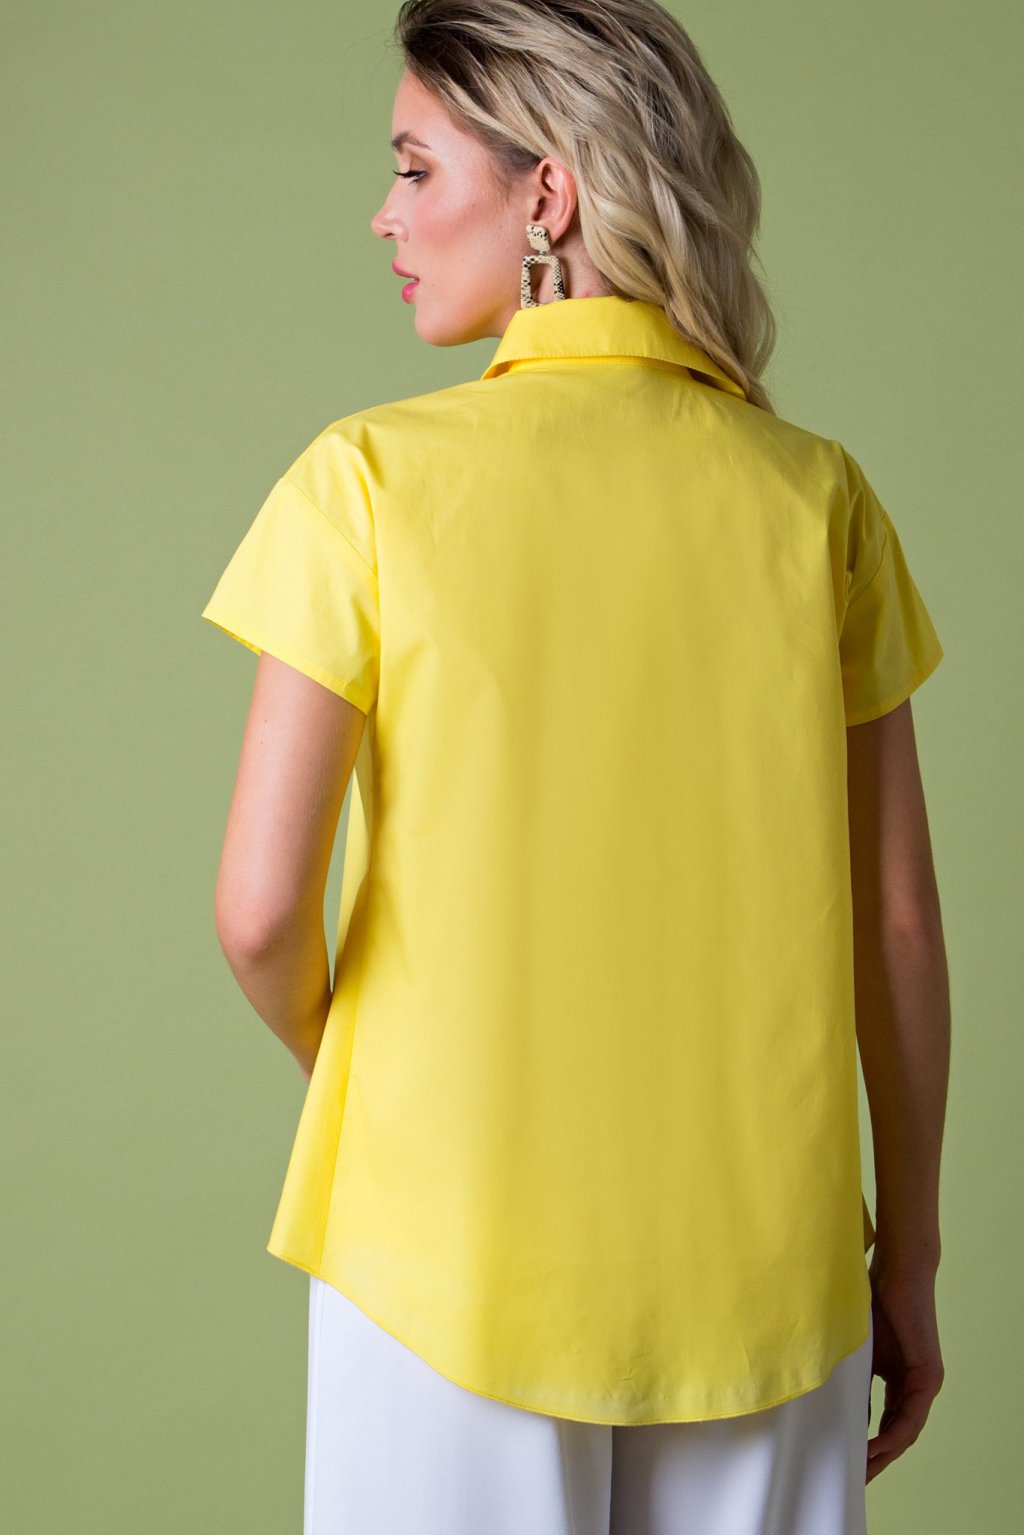 Рубашка из хлопка желтая  (Б-95-4) - 4